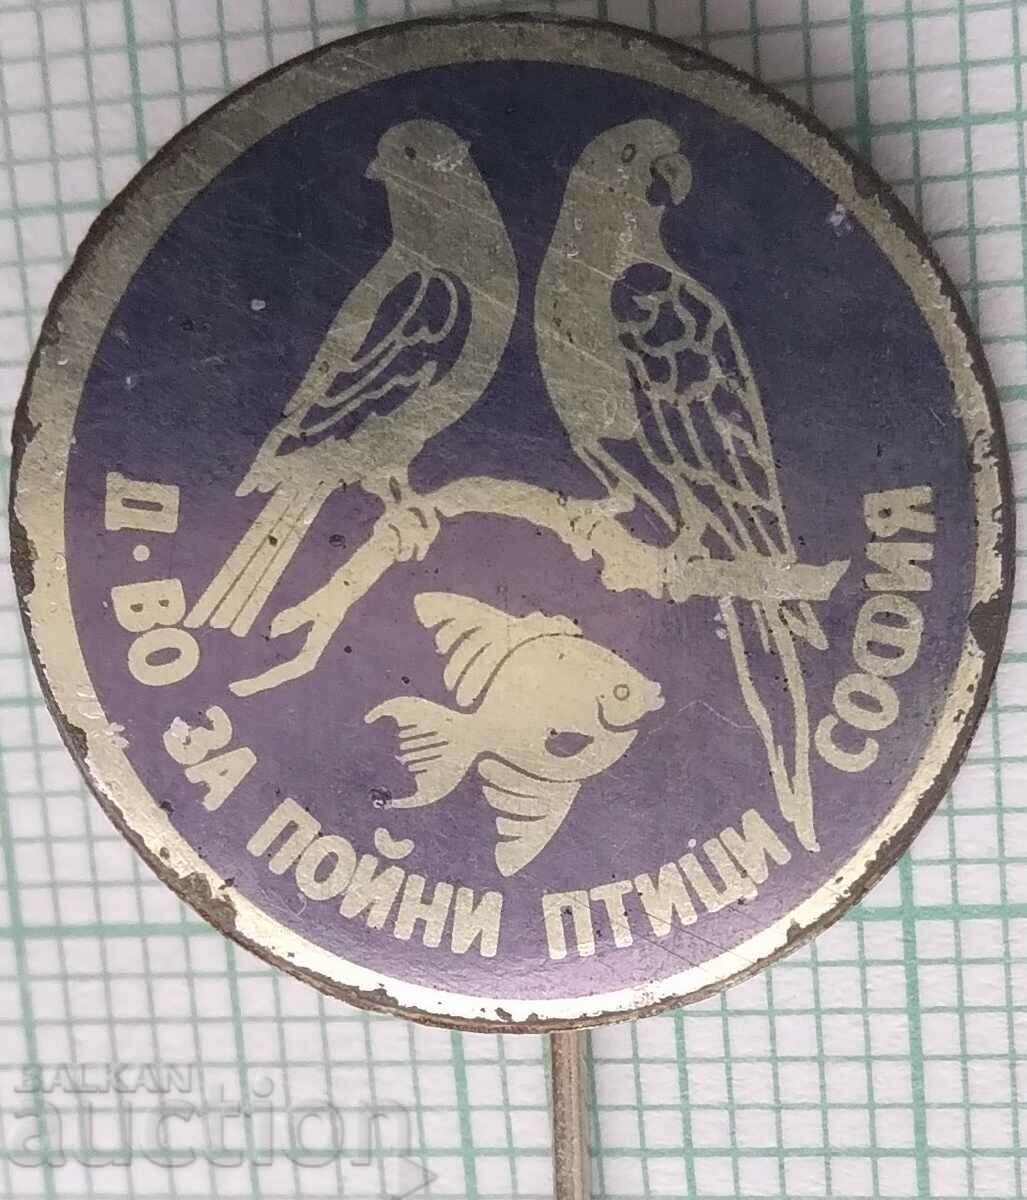 15775 Badge - Society for Songbirds Sofia